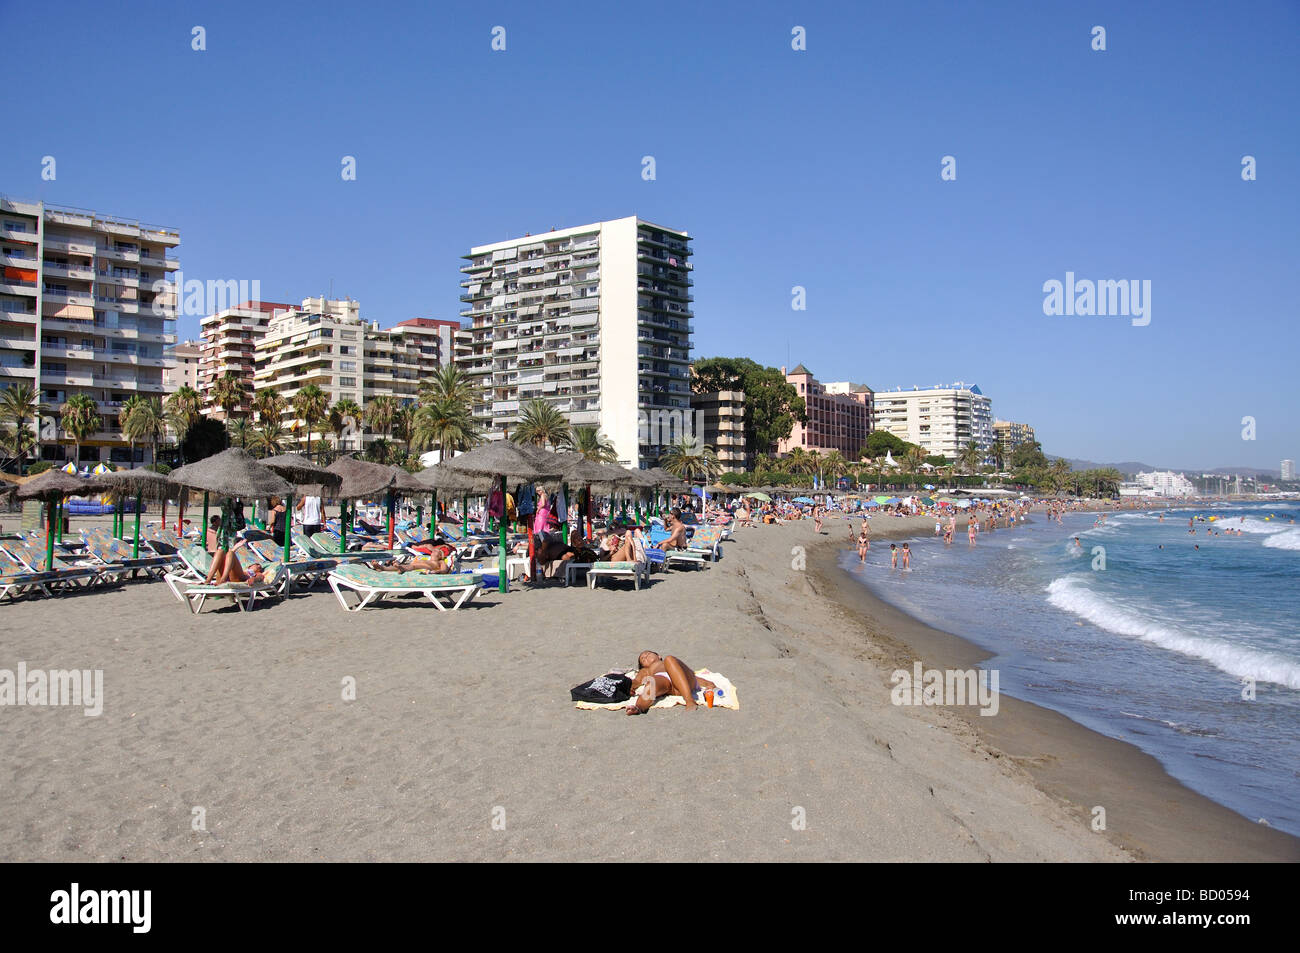 Playa de la Bajadilla, Marbella, Costa del Sol, Malaga Province, Andalucia, Spain Stock Photo